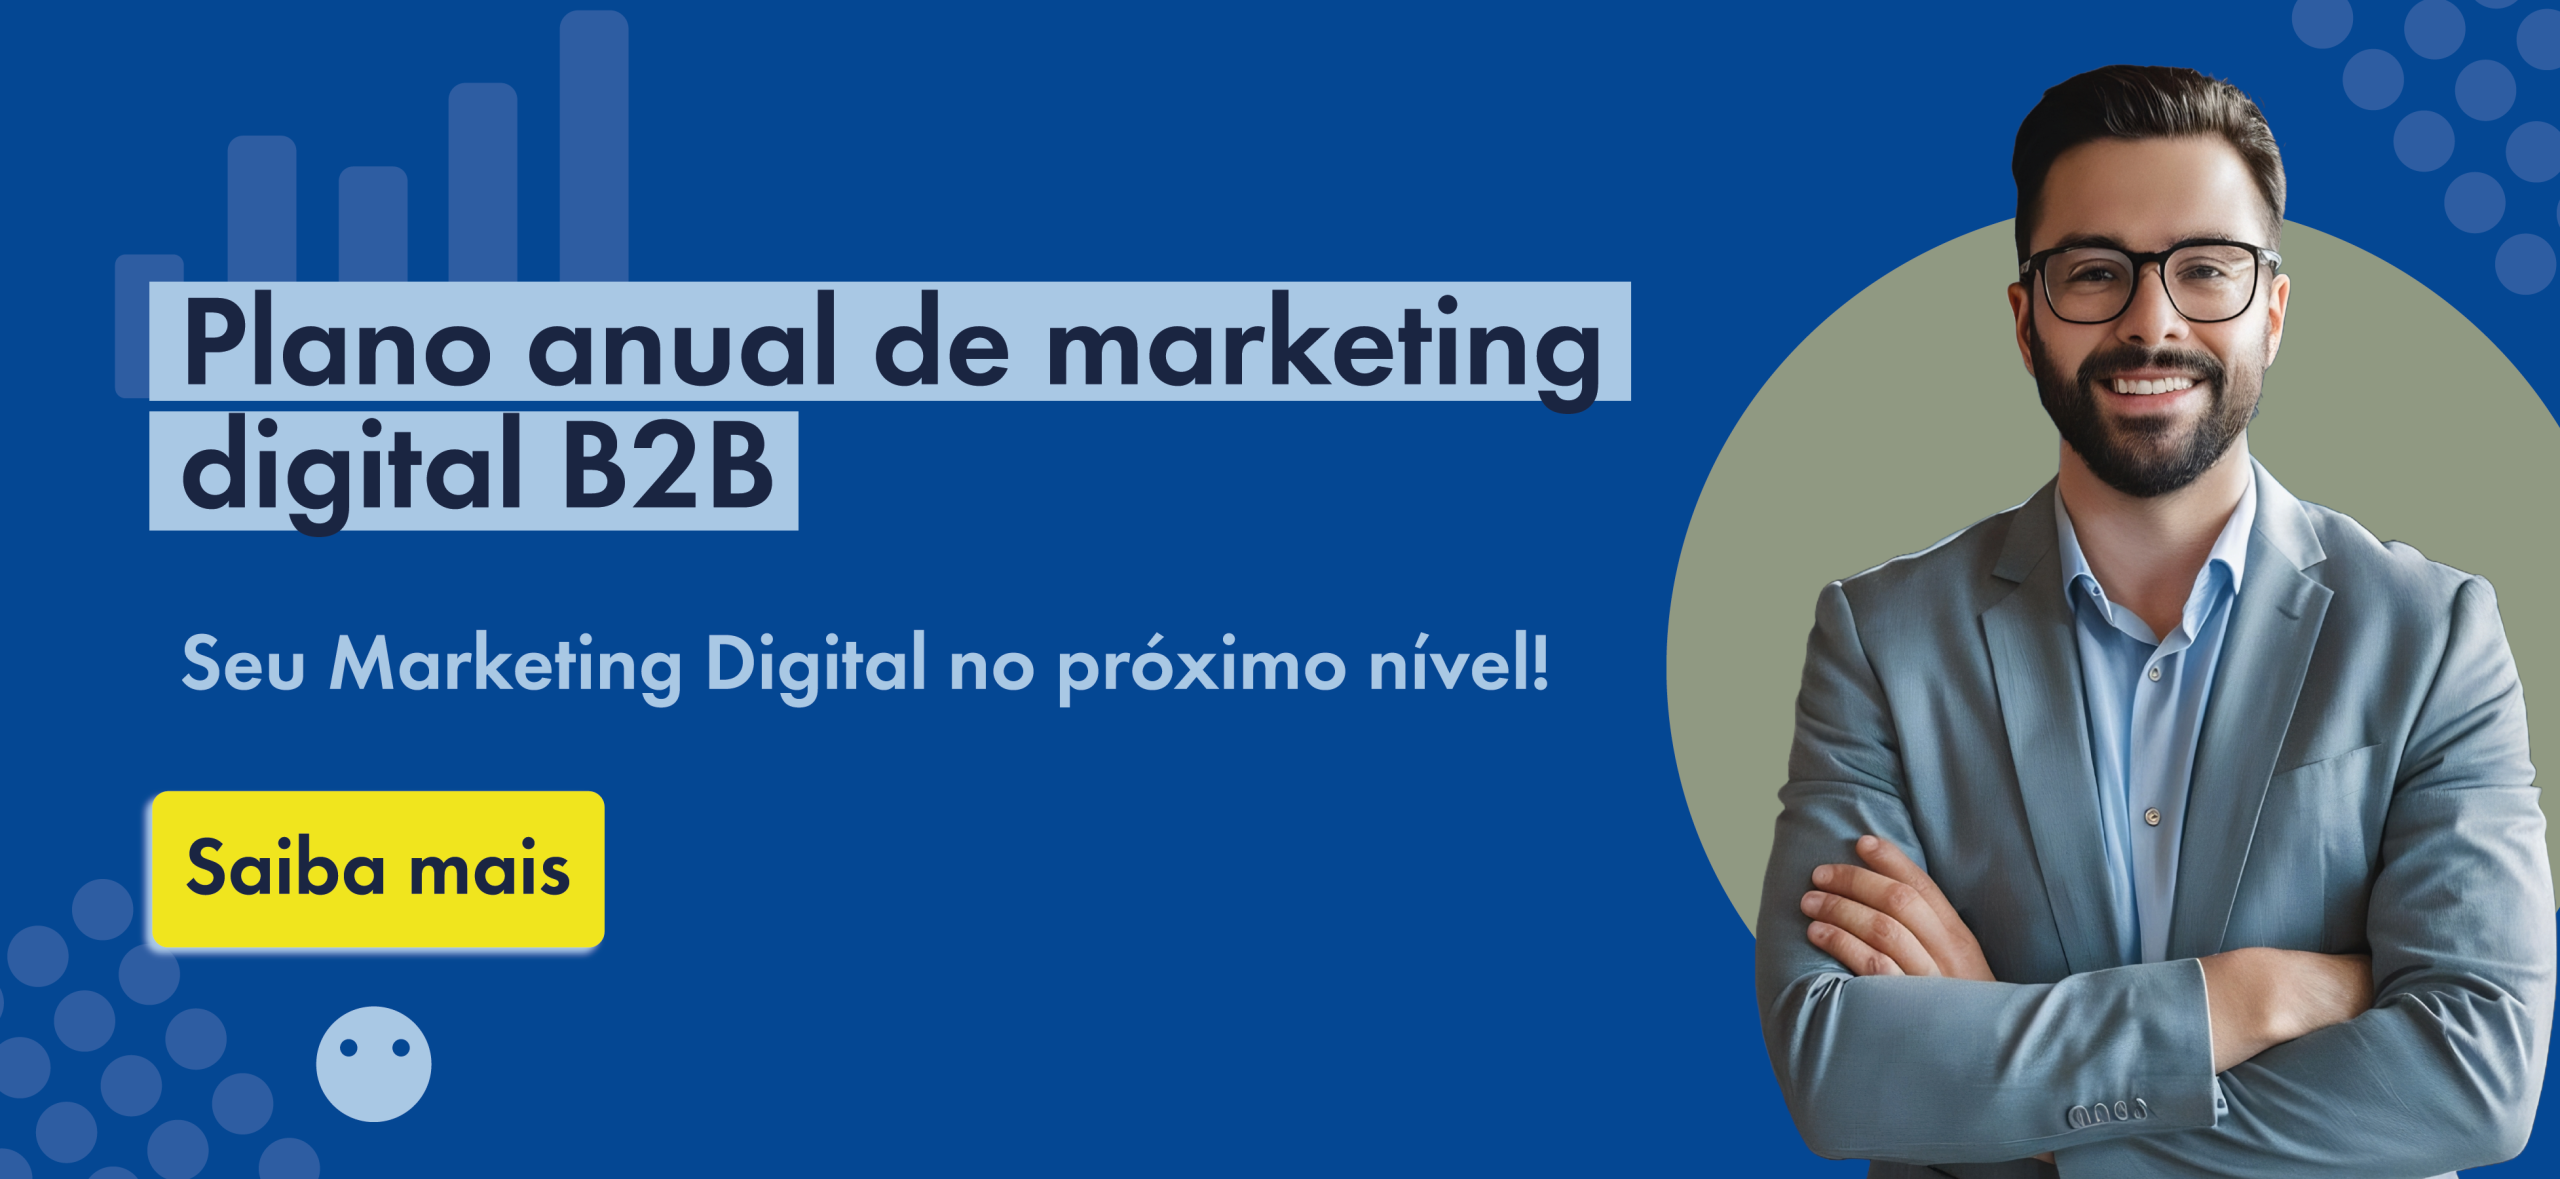 Plano anual de marketing digital B2B